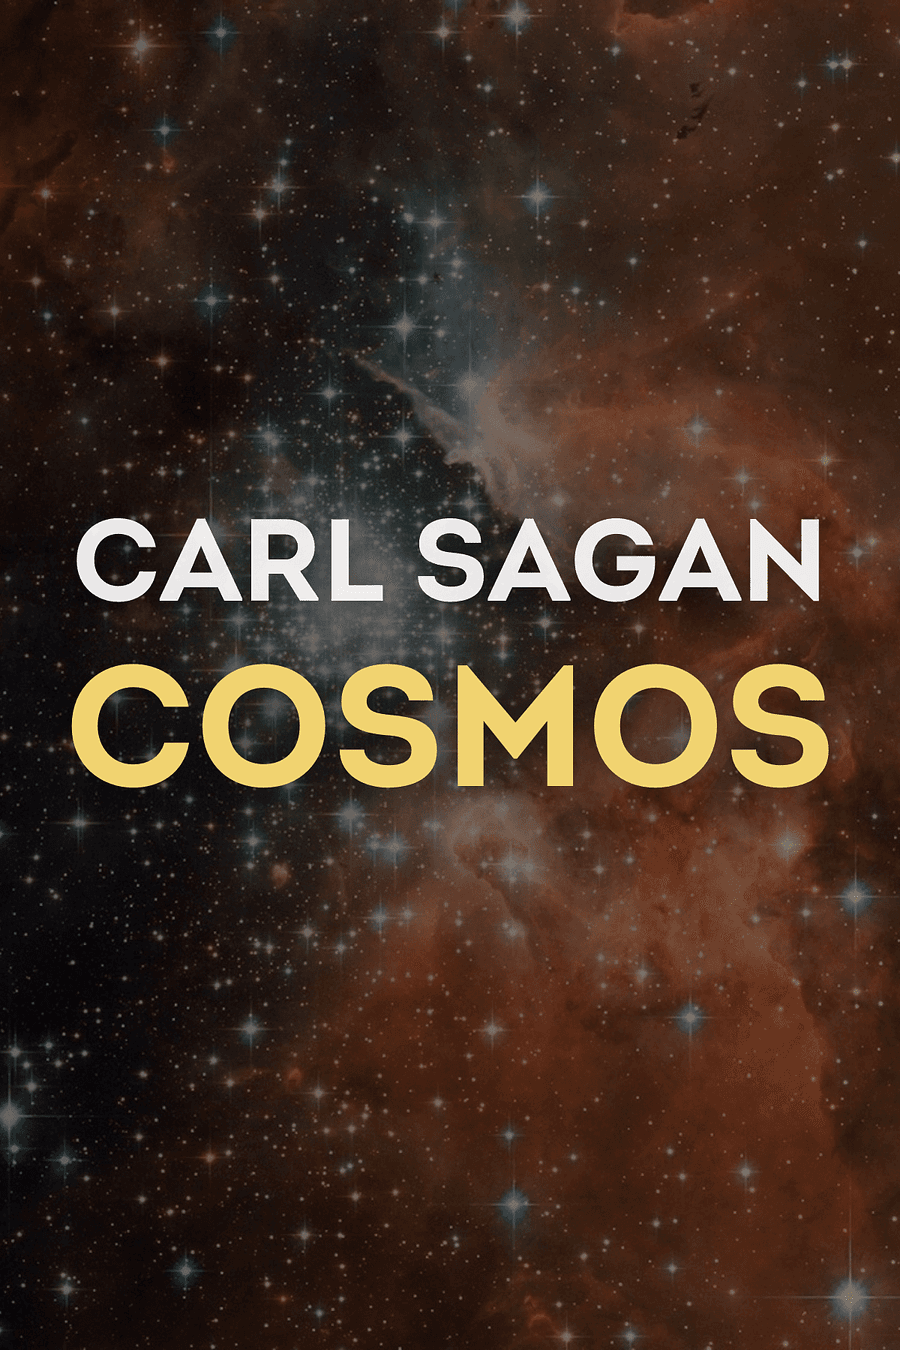 Cosmos by Carl Sagan - Book Summary